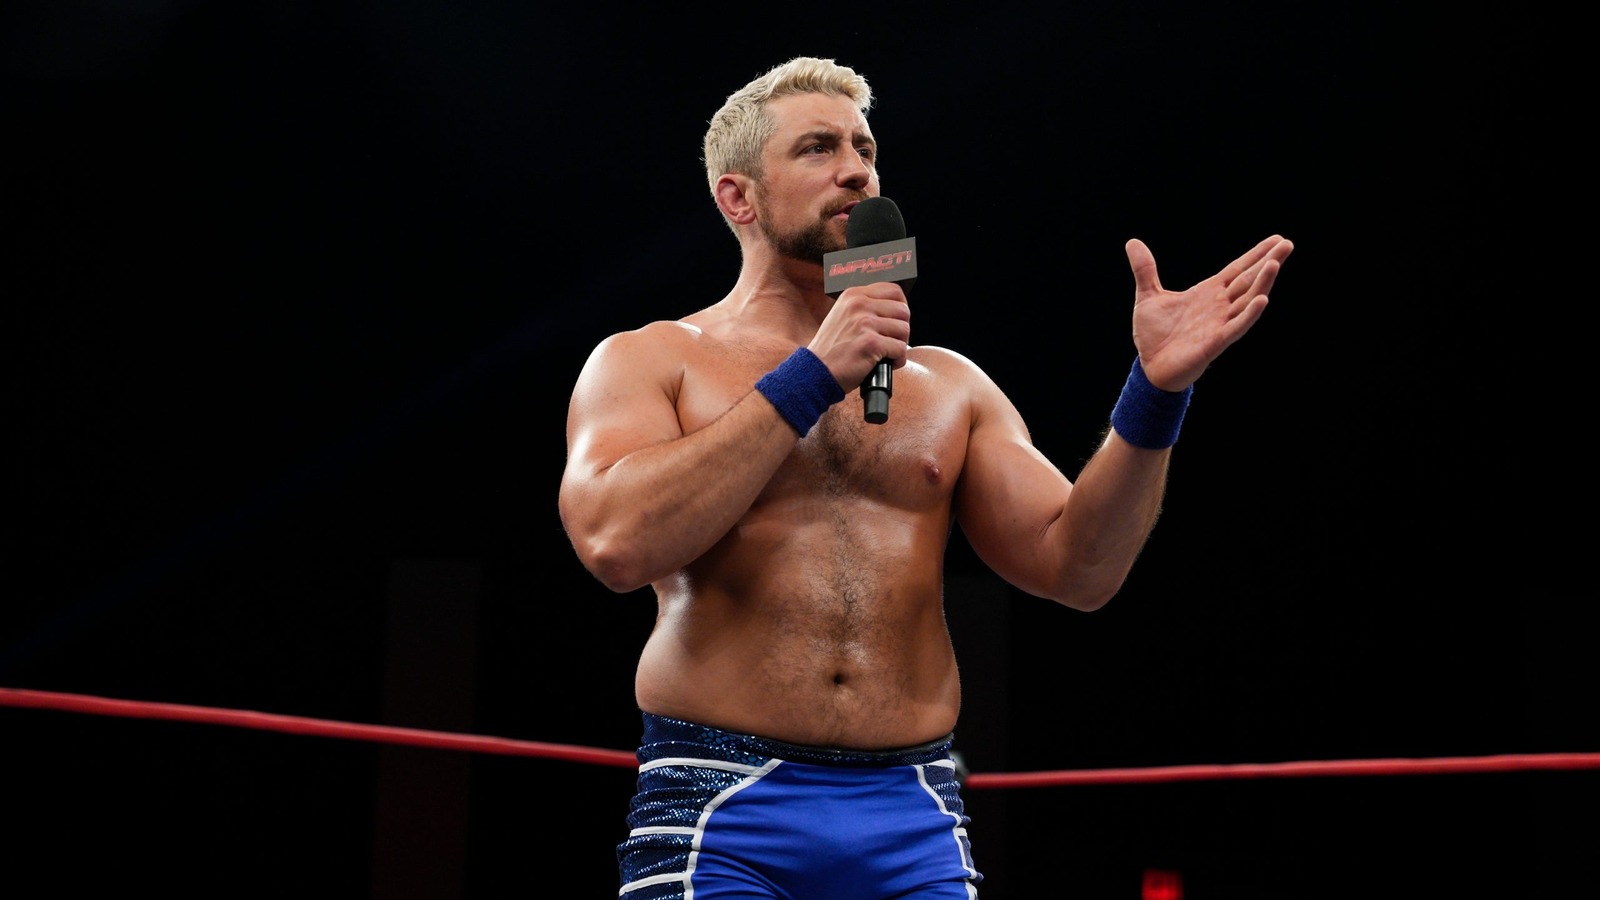 TNA Wrestling Star Joe Hendry's New Single Tops UK iTunes Chart